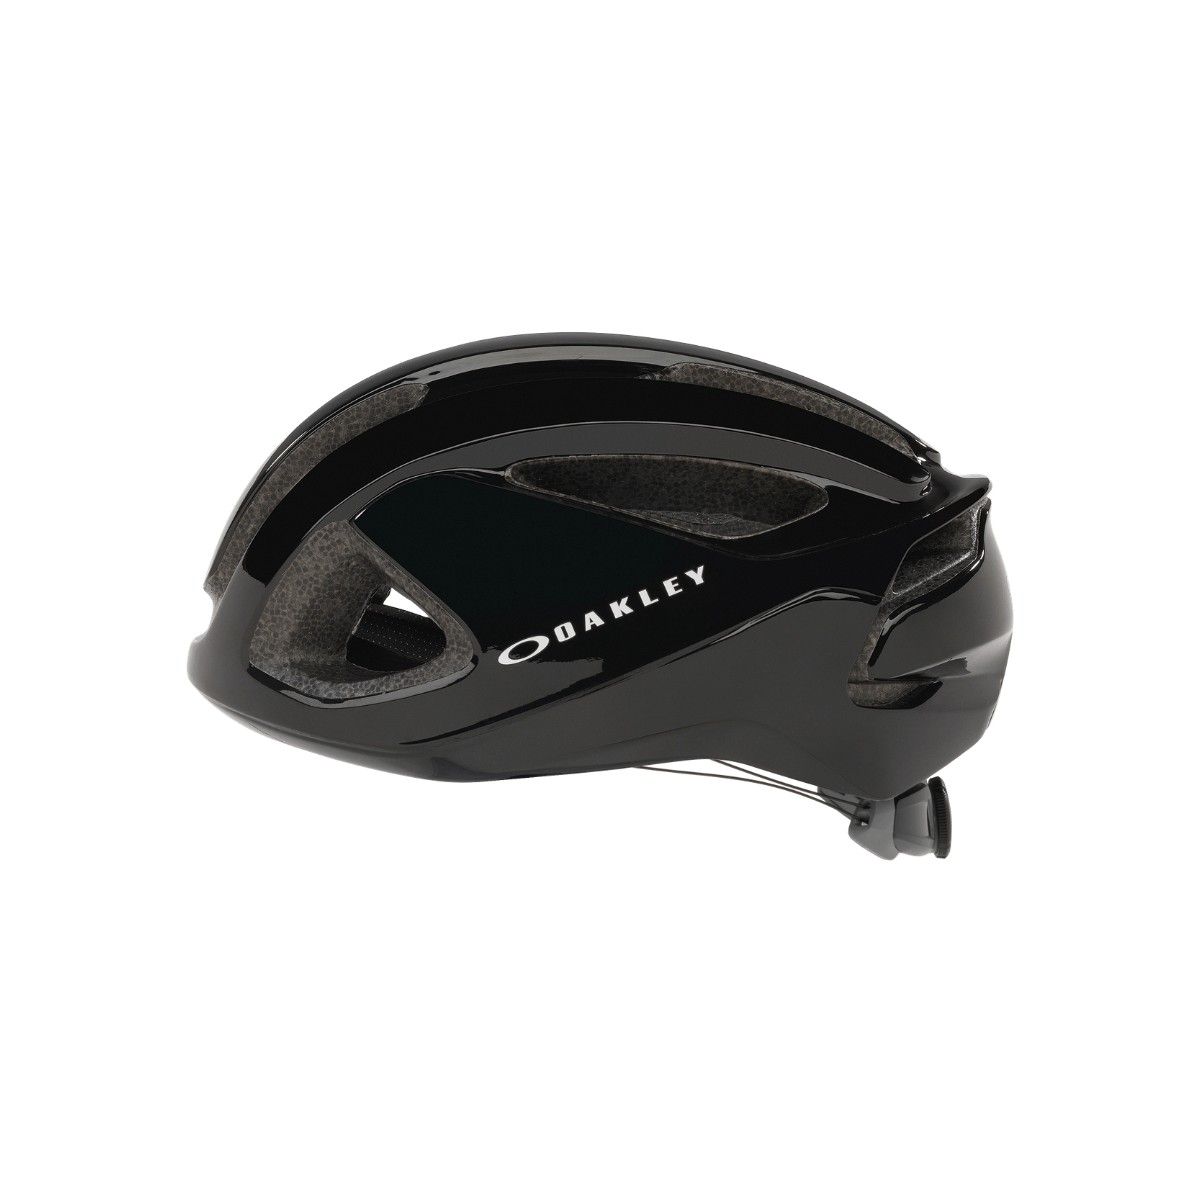 Oakley ARO3 Lite Helmet Black, Size M (54-58 cm)